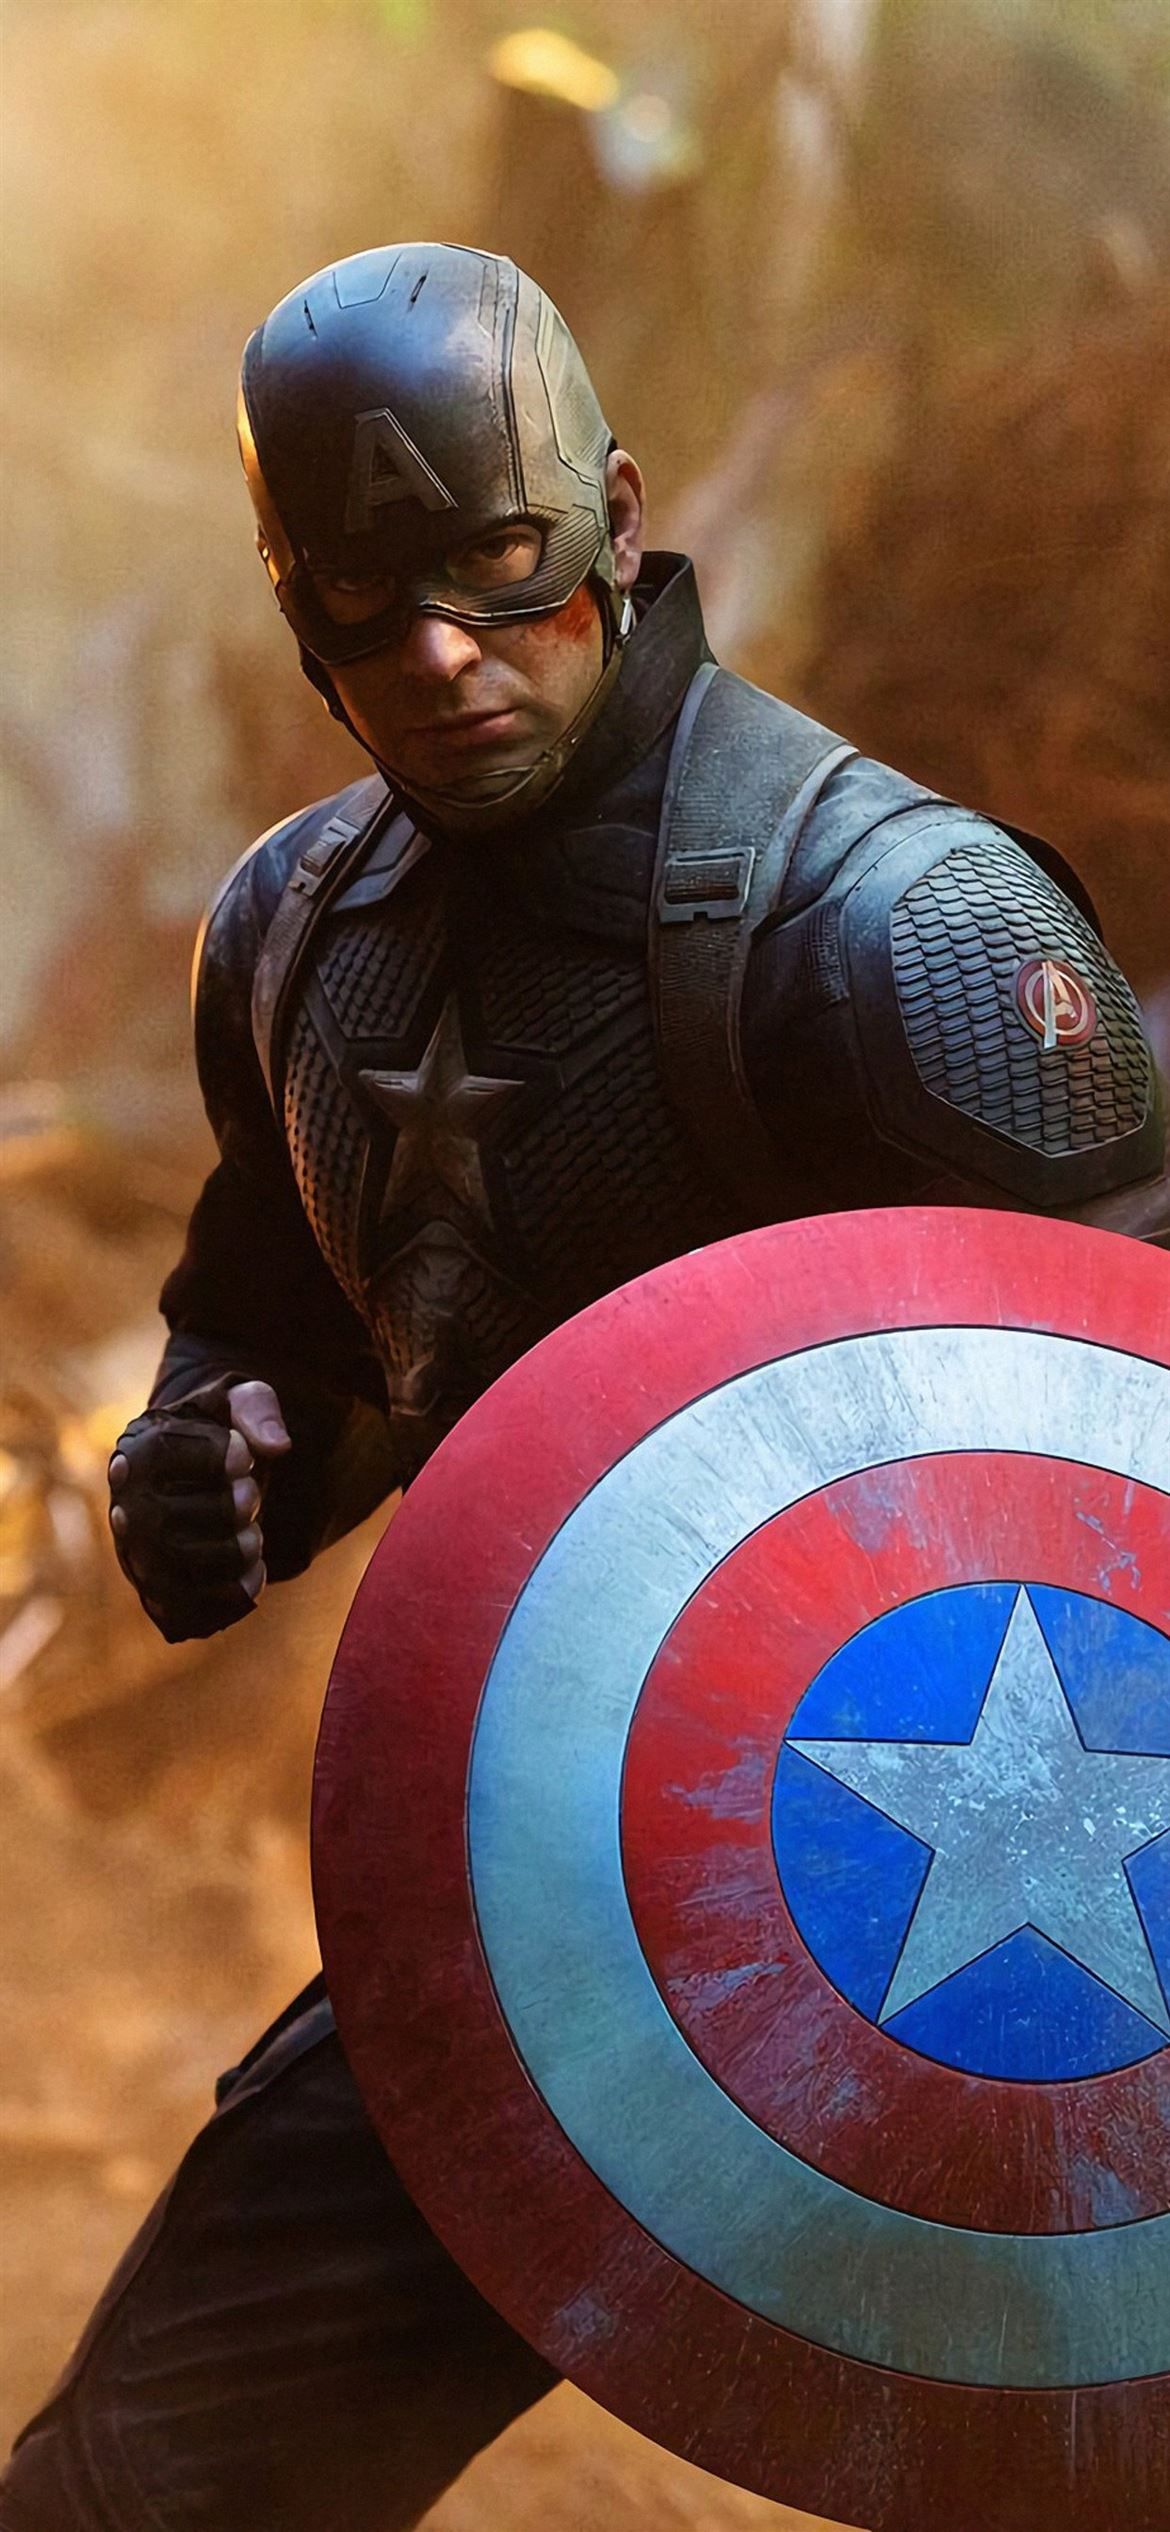 captain america avengers endgame movie iPhone 12 Wallpaper Free Download